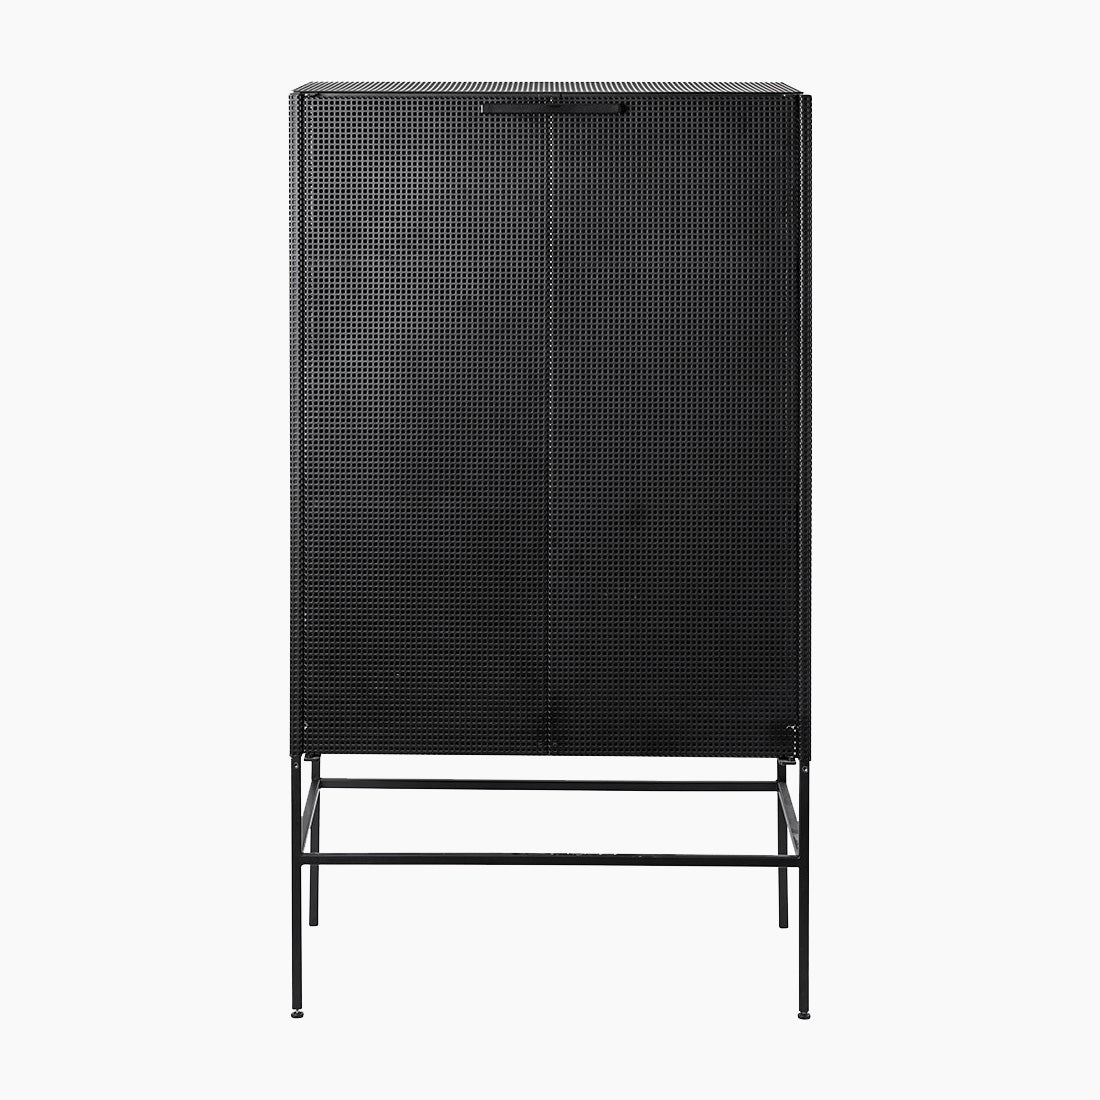 Kristina Dam Studio Grid Cabinet, Black